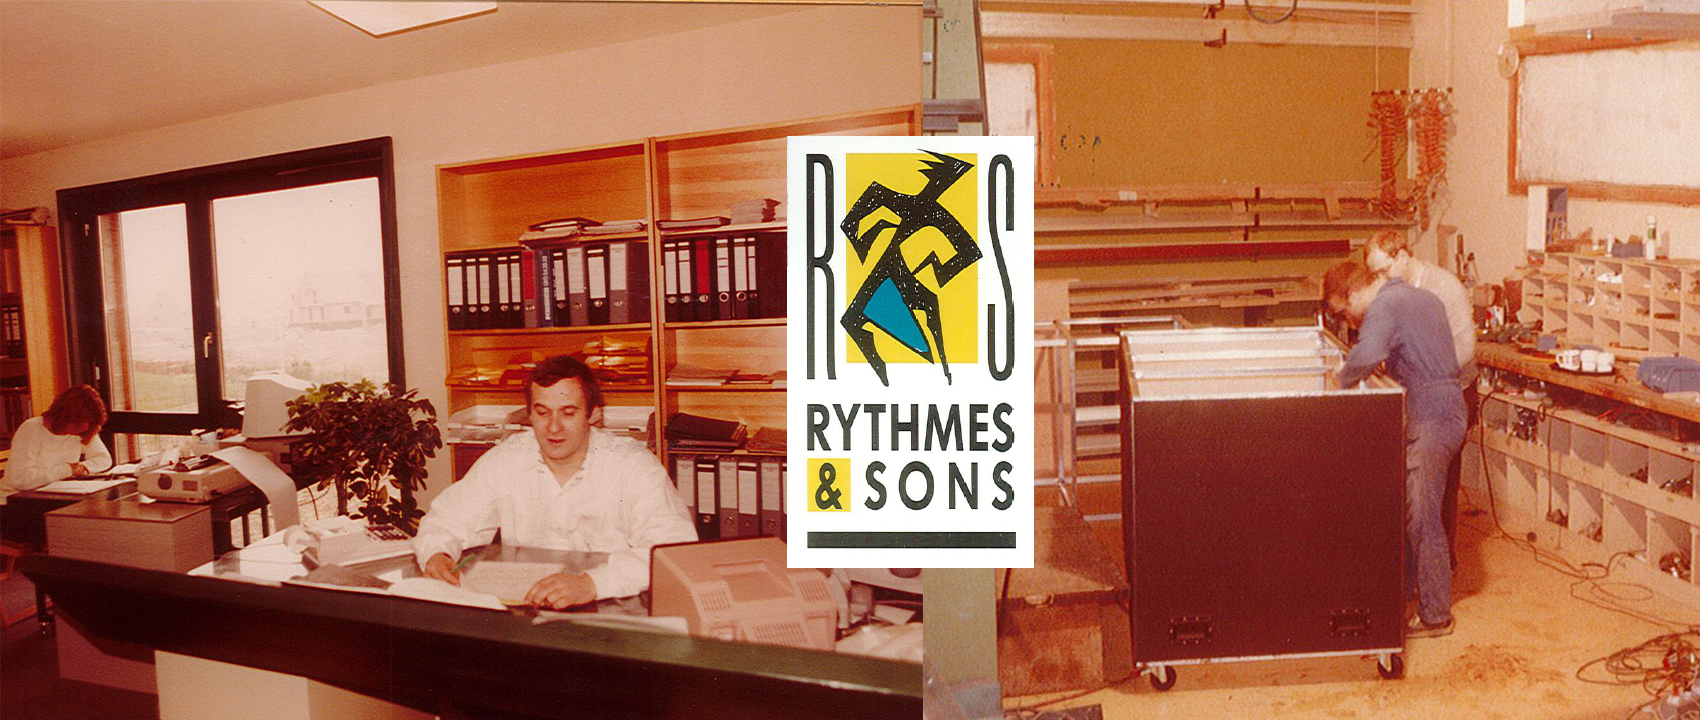 Claude et Catherine WALTER fondent RYTHMES & SONS en 1981.